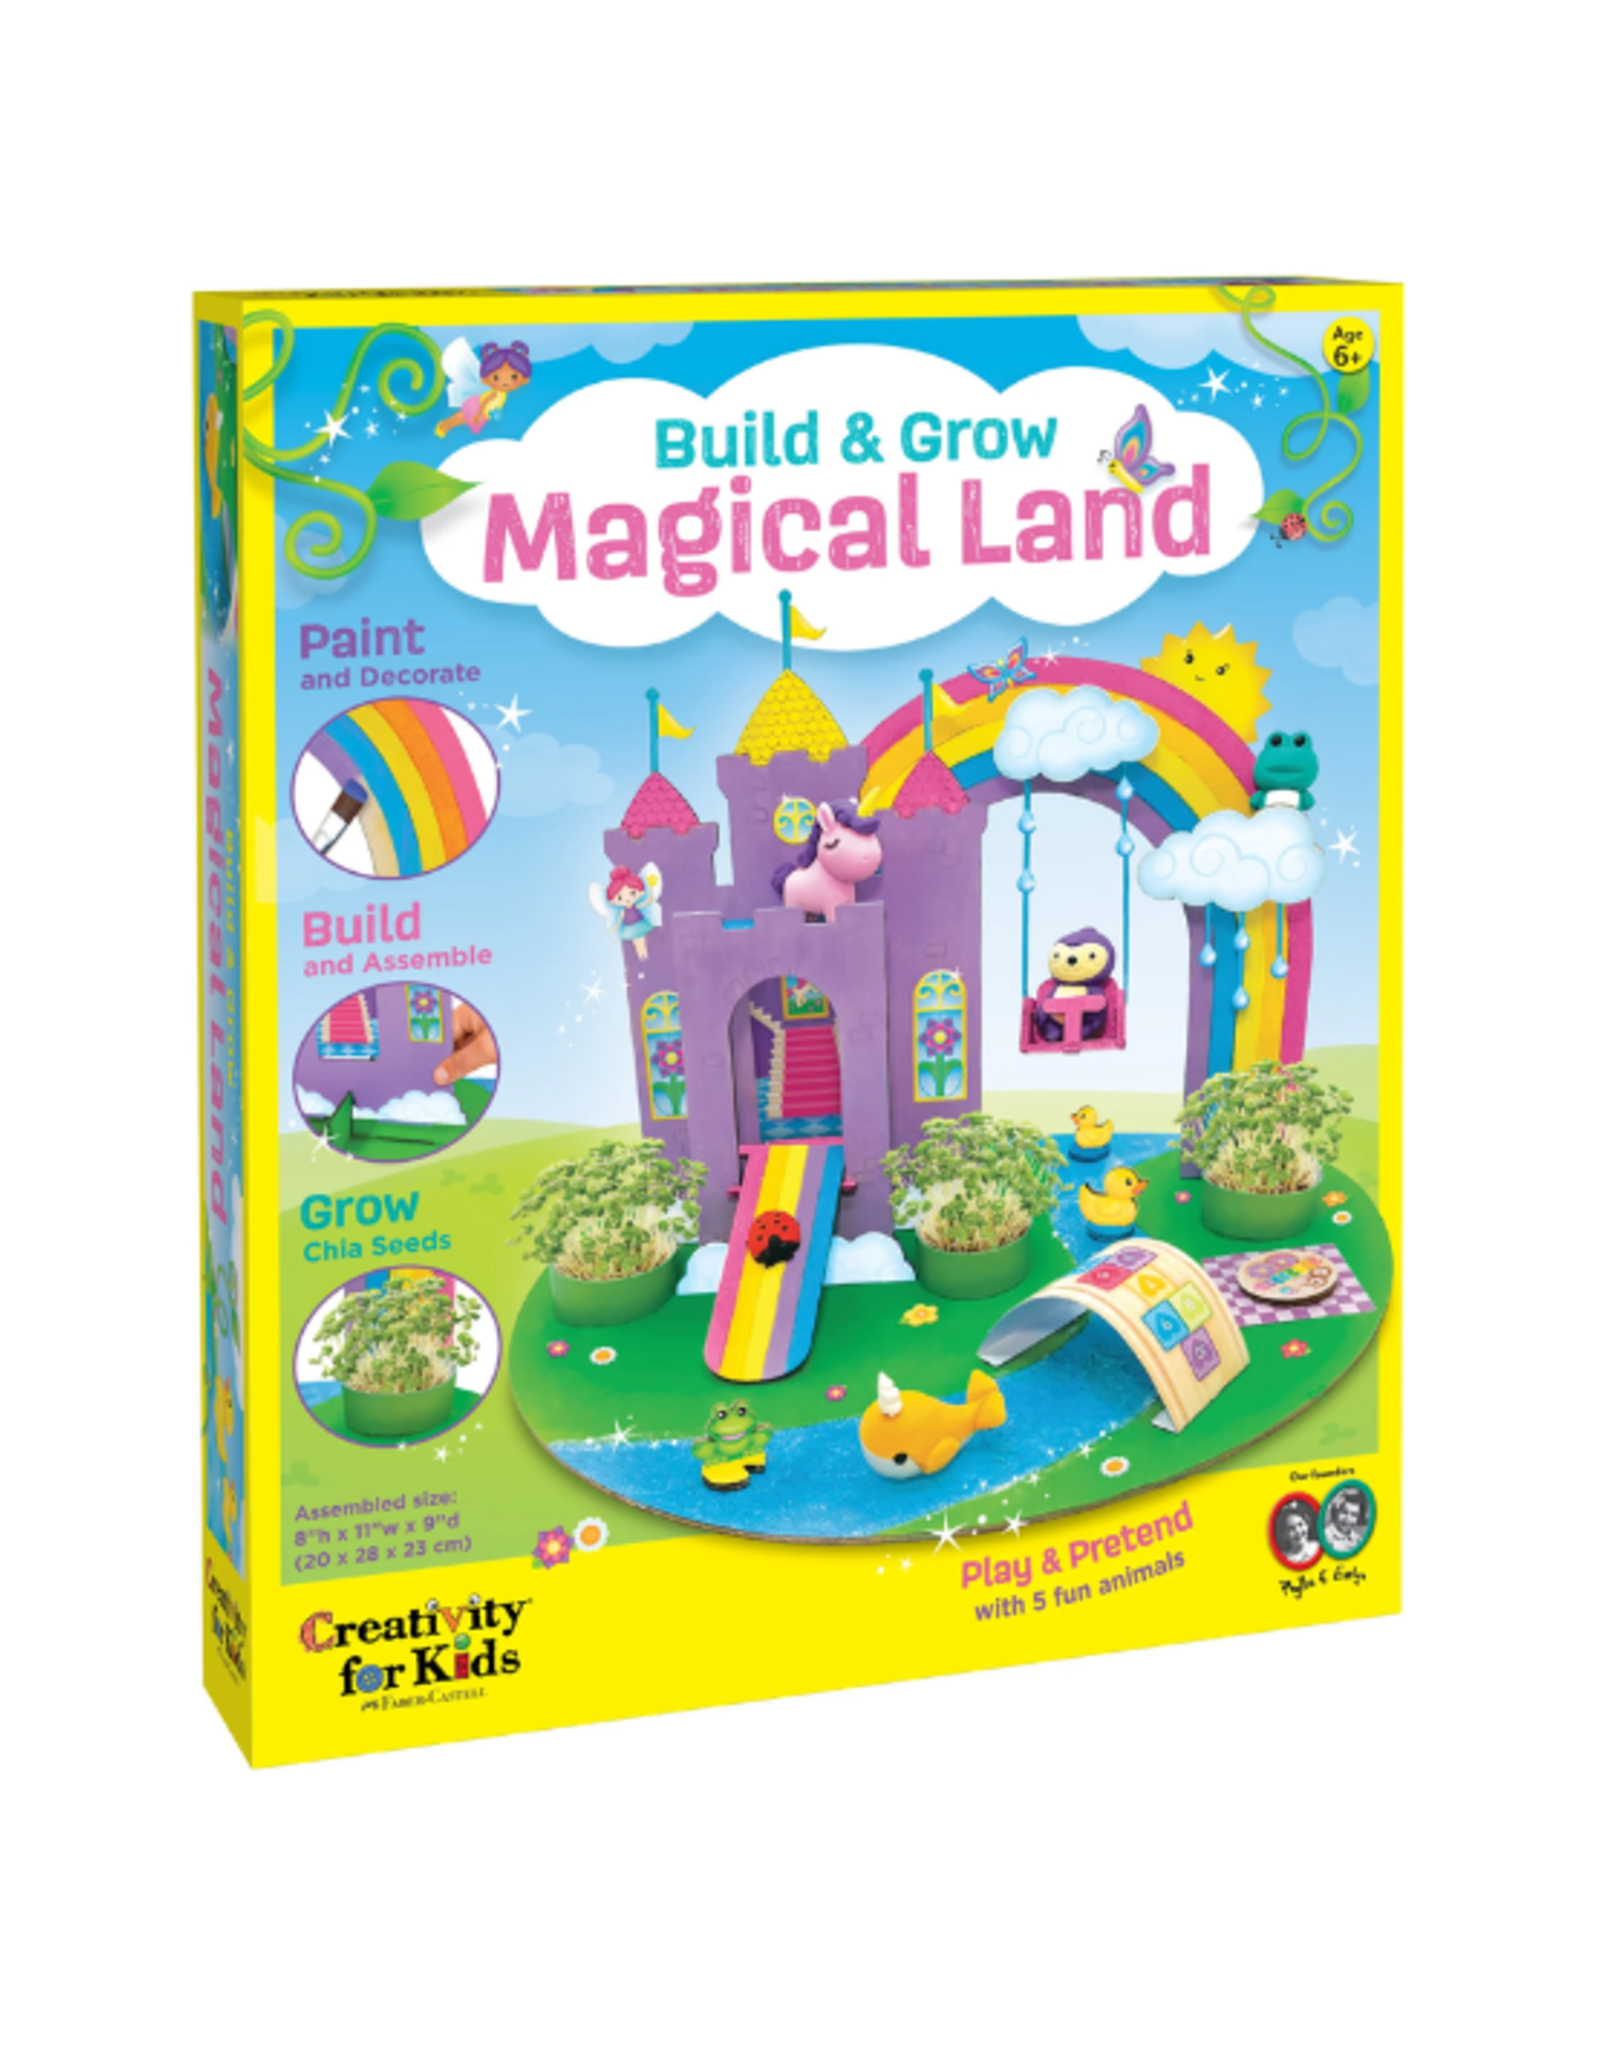 Creativity for Kids Creativity for Kids - Build & Grow Magical Land